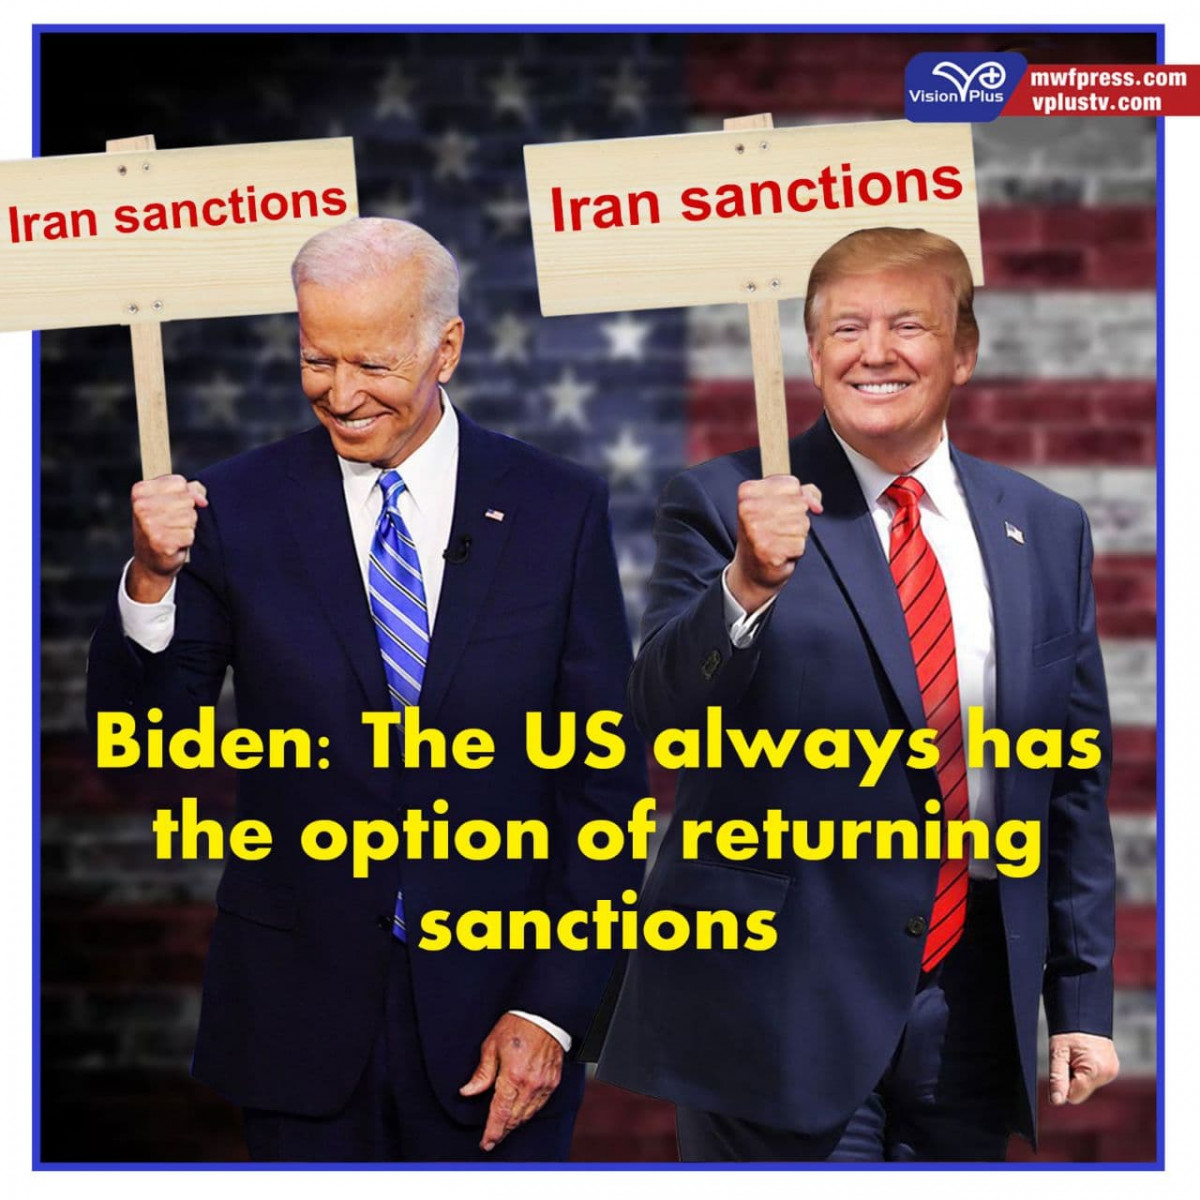 Biden: The US always has the option of returning sanctions